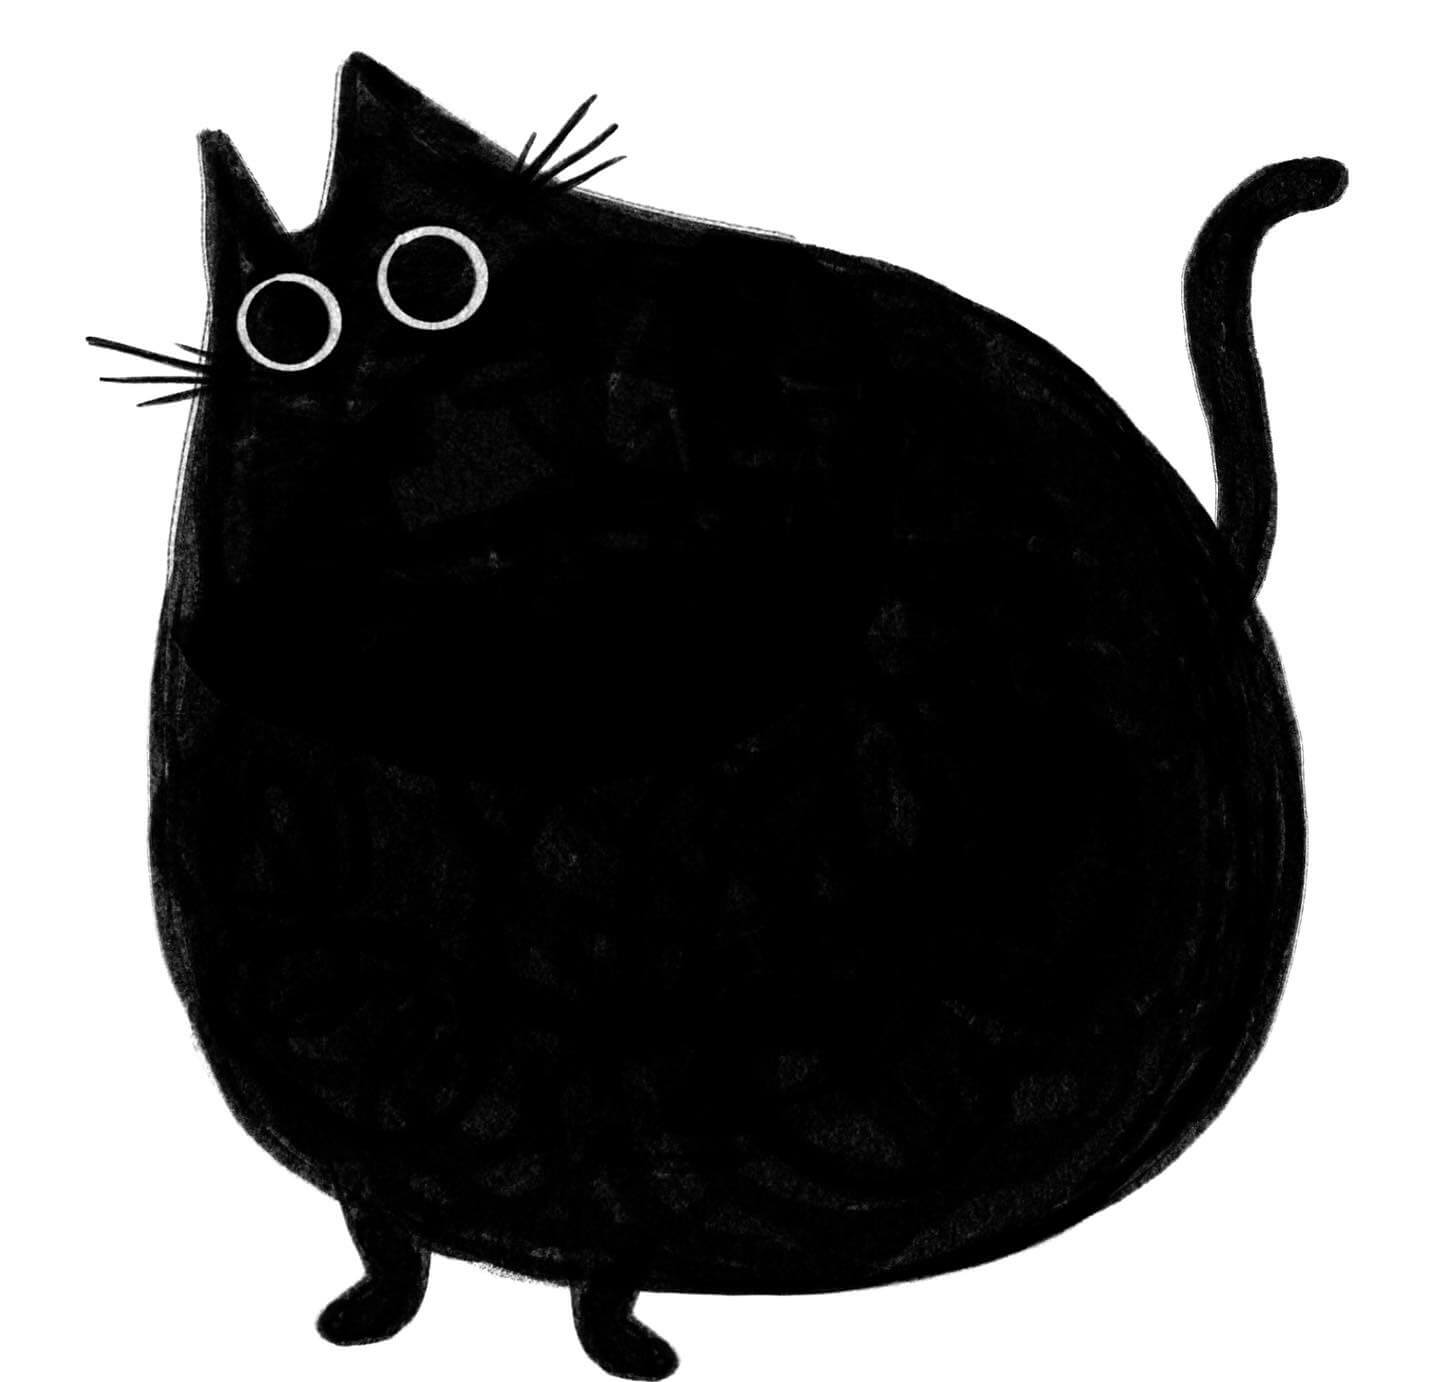 Fat black cat, illustration by Shawna Mercano